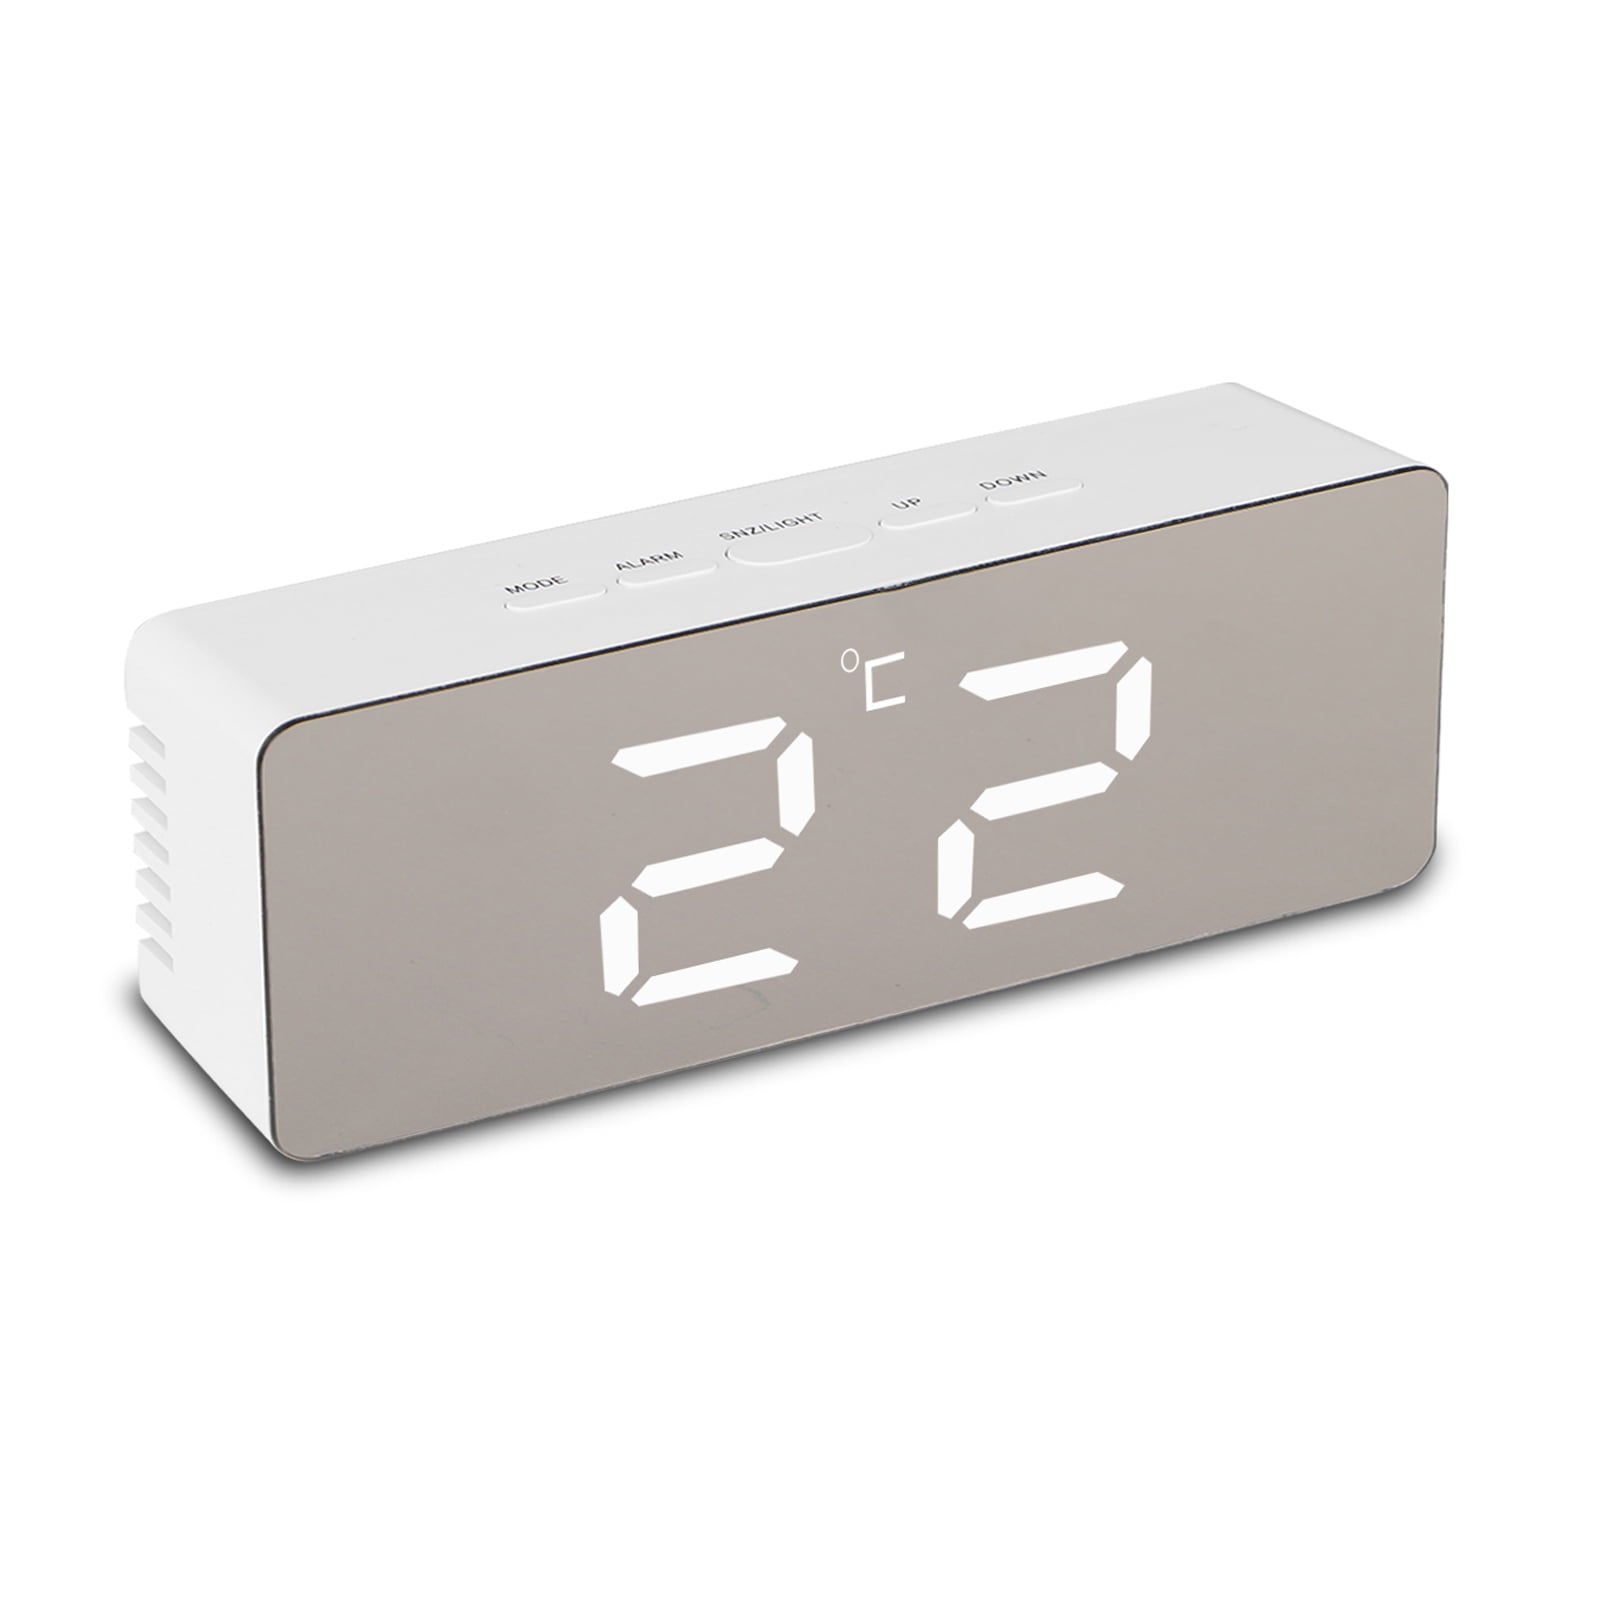 LED Digital Alarm Clock Night Light Thermometer Display Mirror Snooze USB Power 